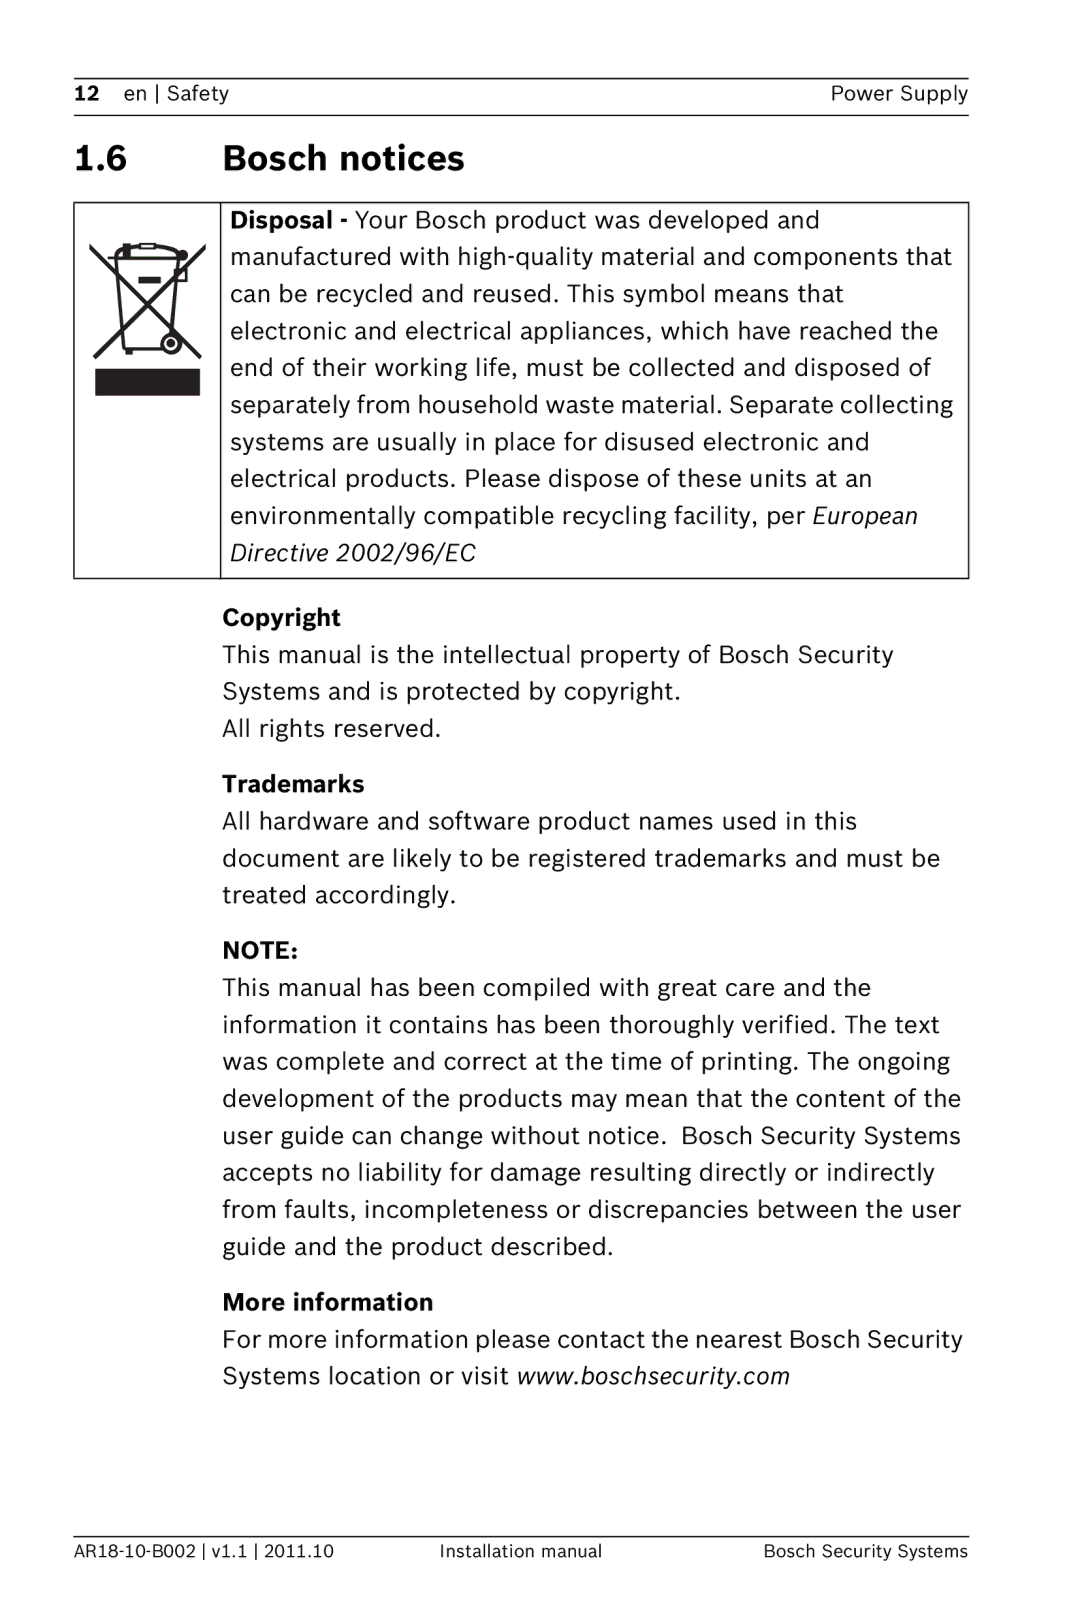 Bosch Appliances PSU-124-DC050 installation manual Bosch notices, Copyright, Trademarks, More information 